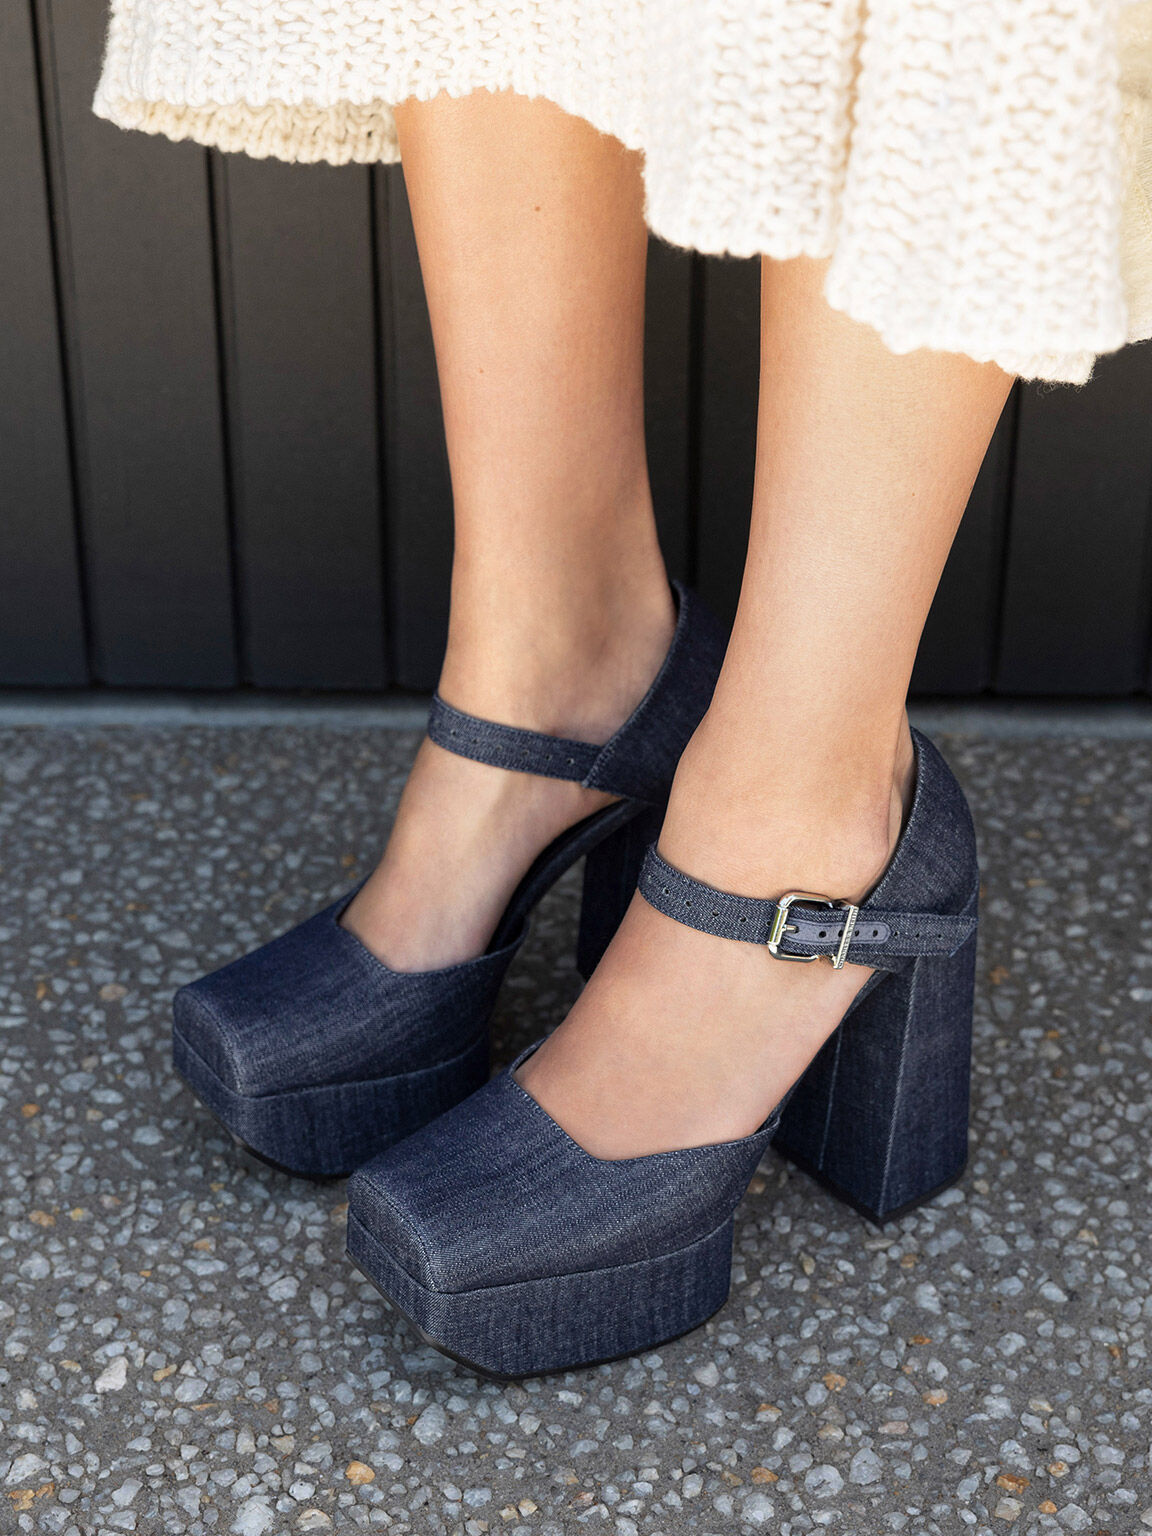 Buy Eleache Trends Round Toe Blue Denim block heels sandal for women and  Girls at Amazon.in